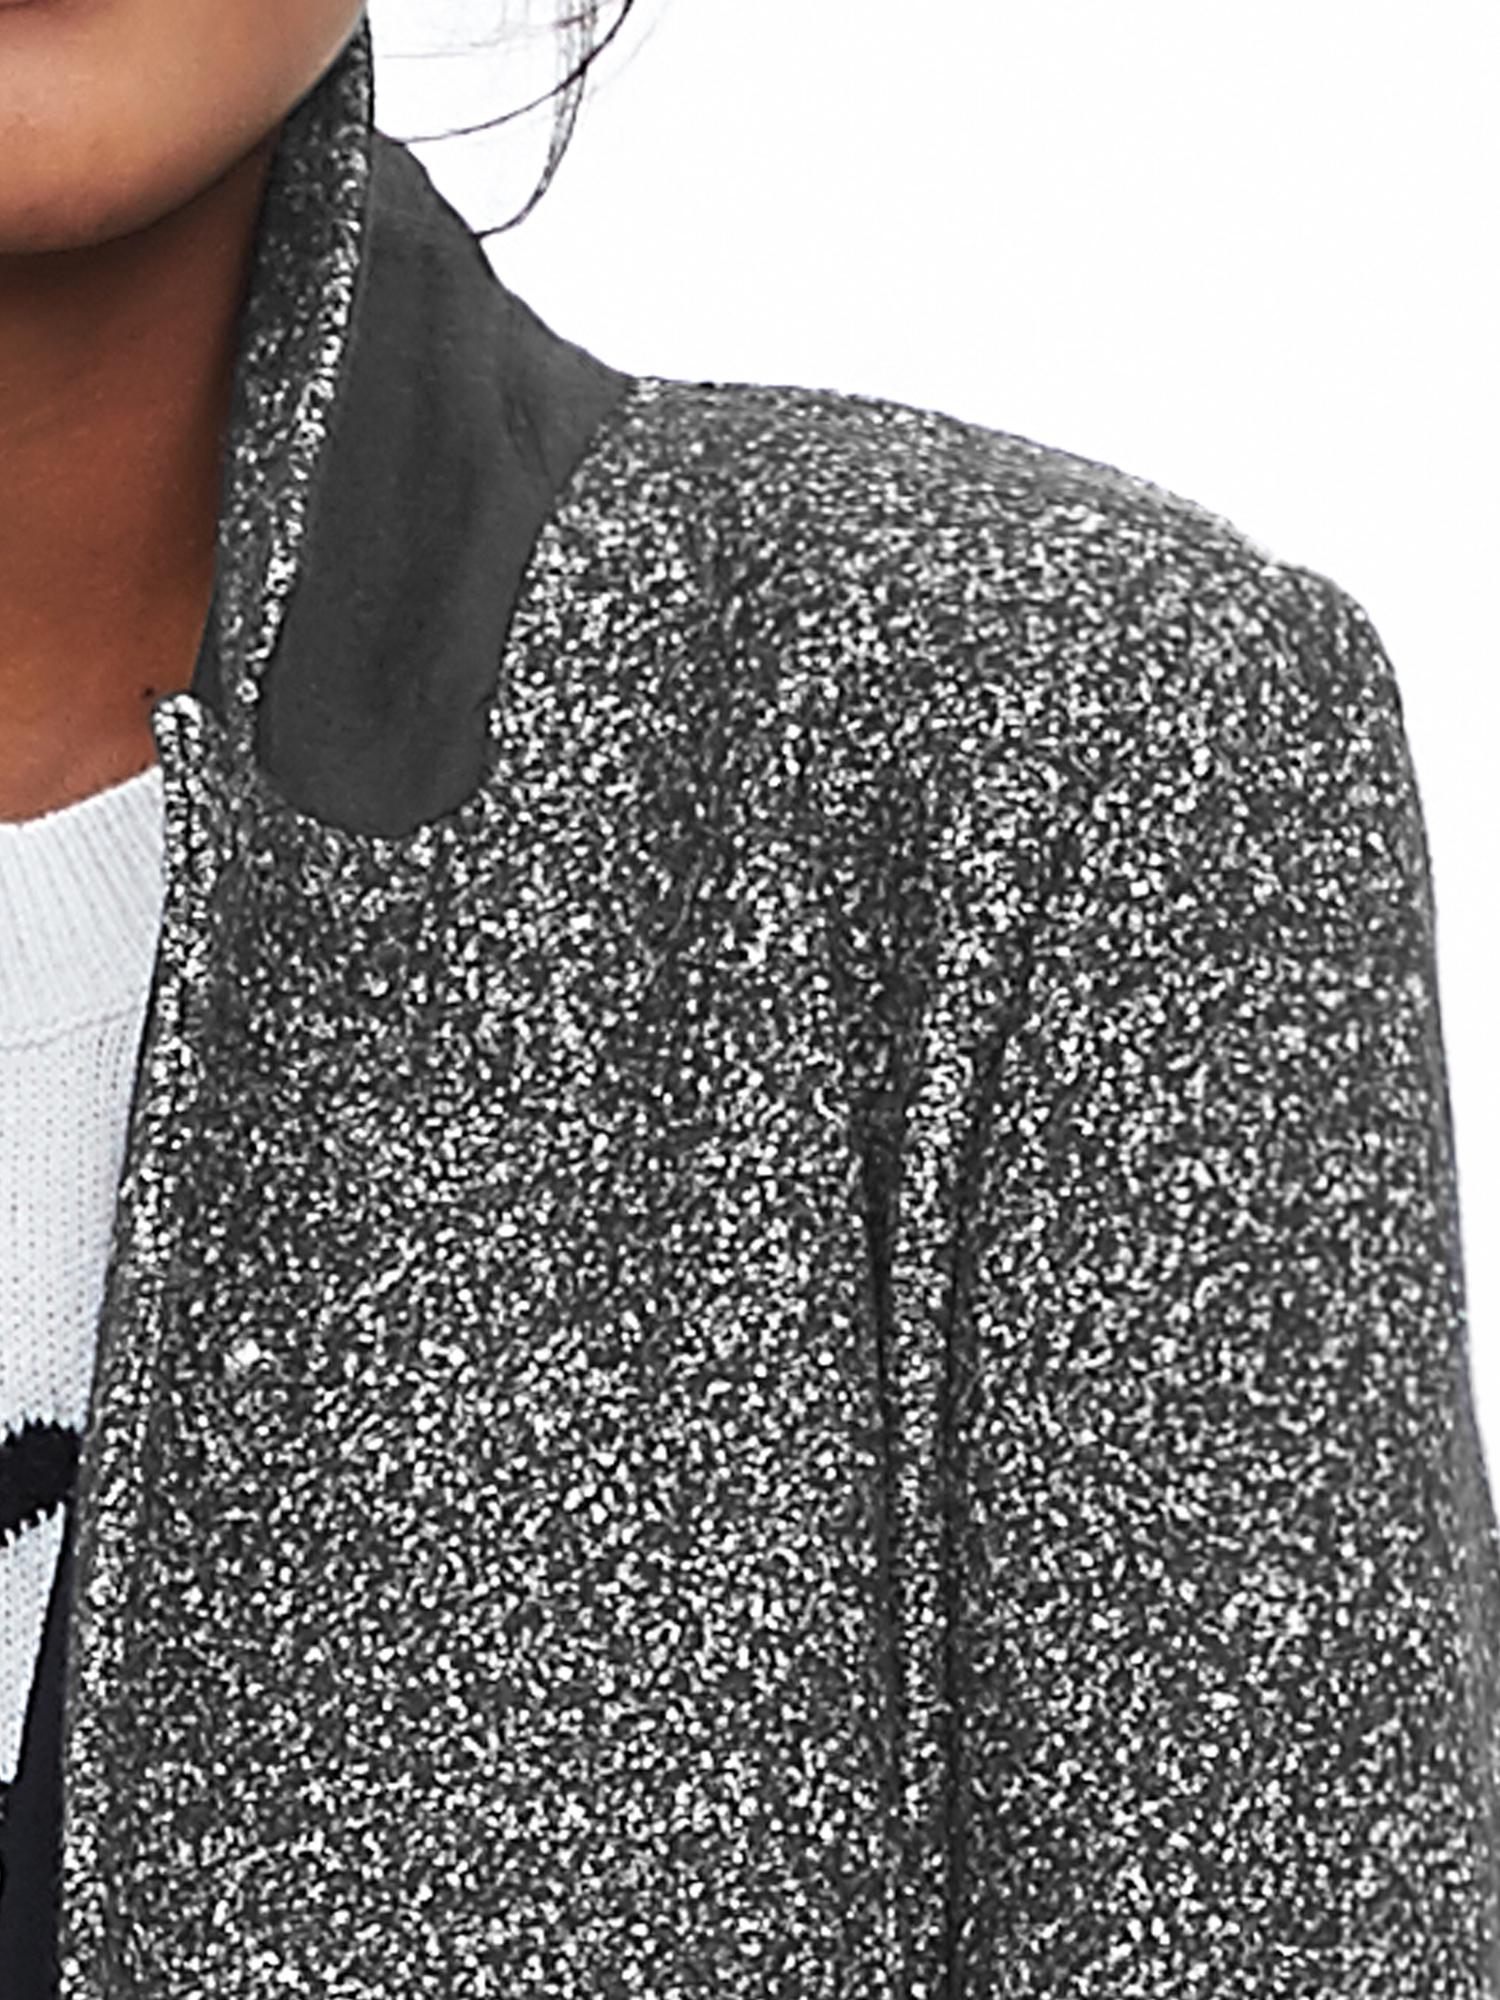 Tweed One-Button Coat